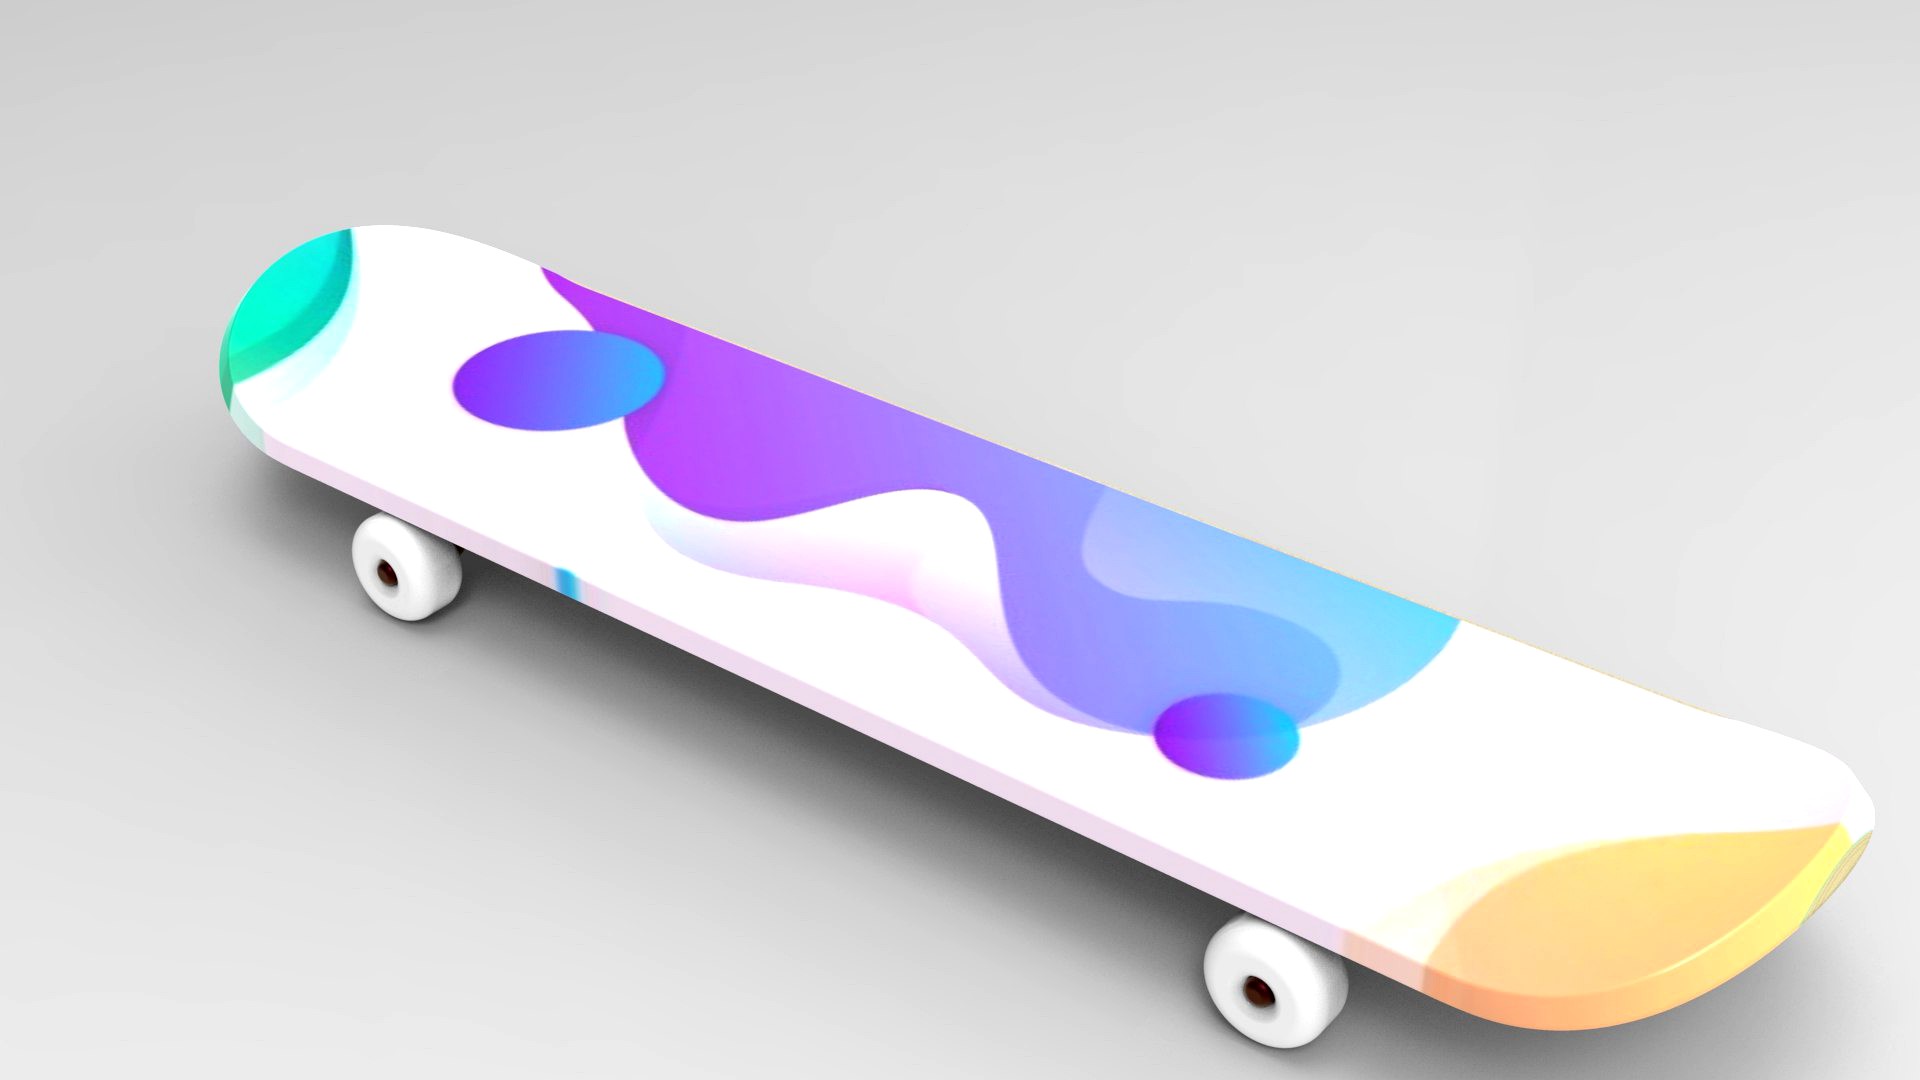 SKATING SKATE BOARD - Sports Low-poly 3D model